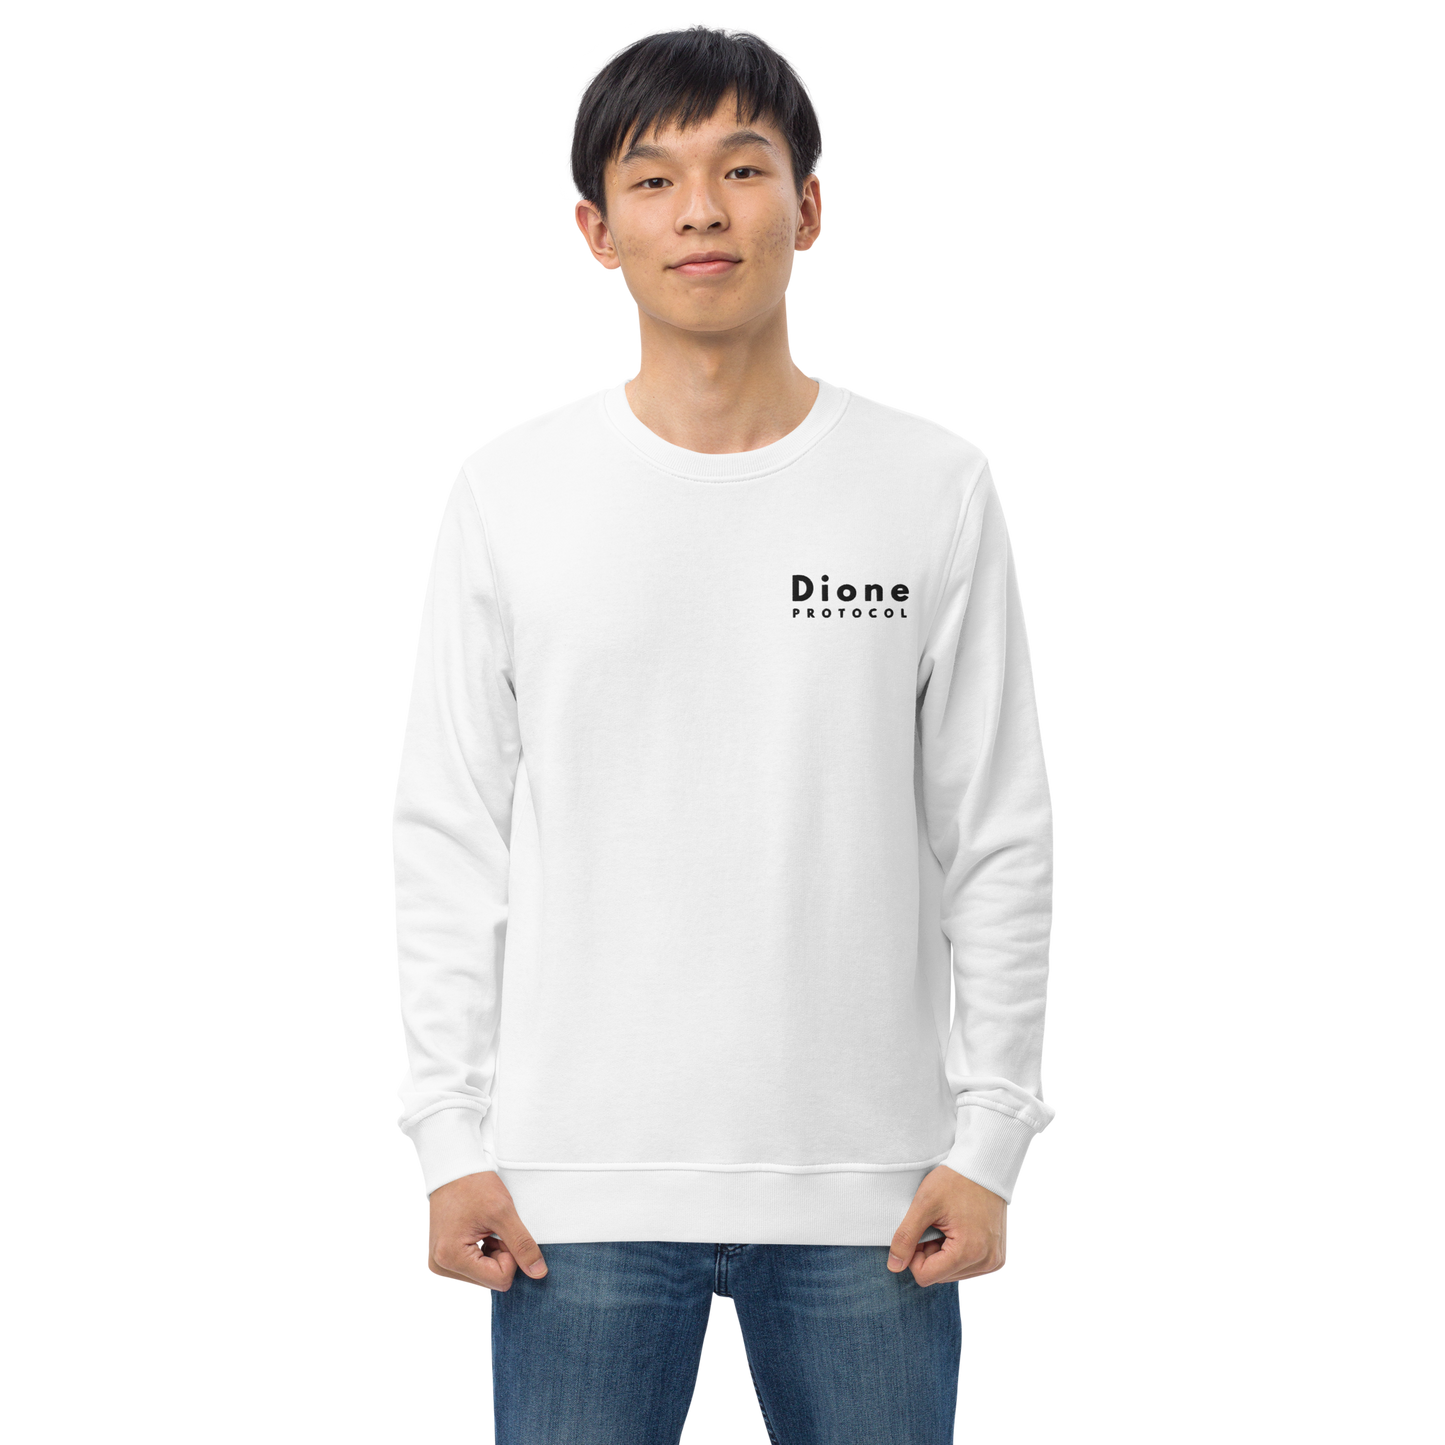 Sweatshirt - Discreet V1.0 - White - Standard